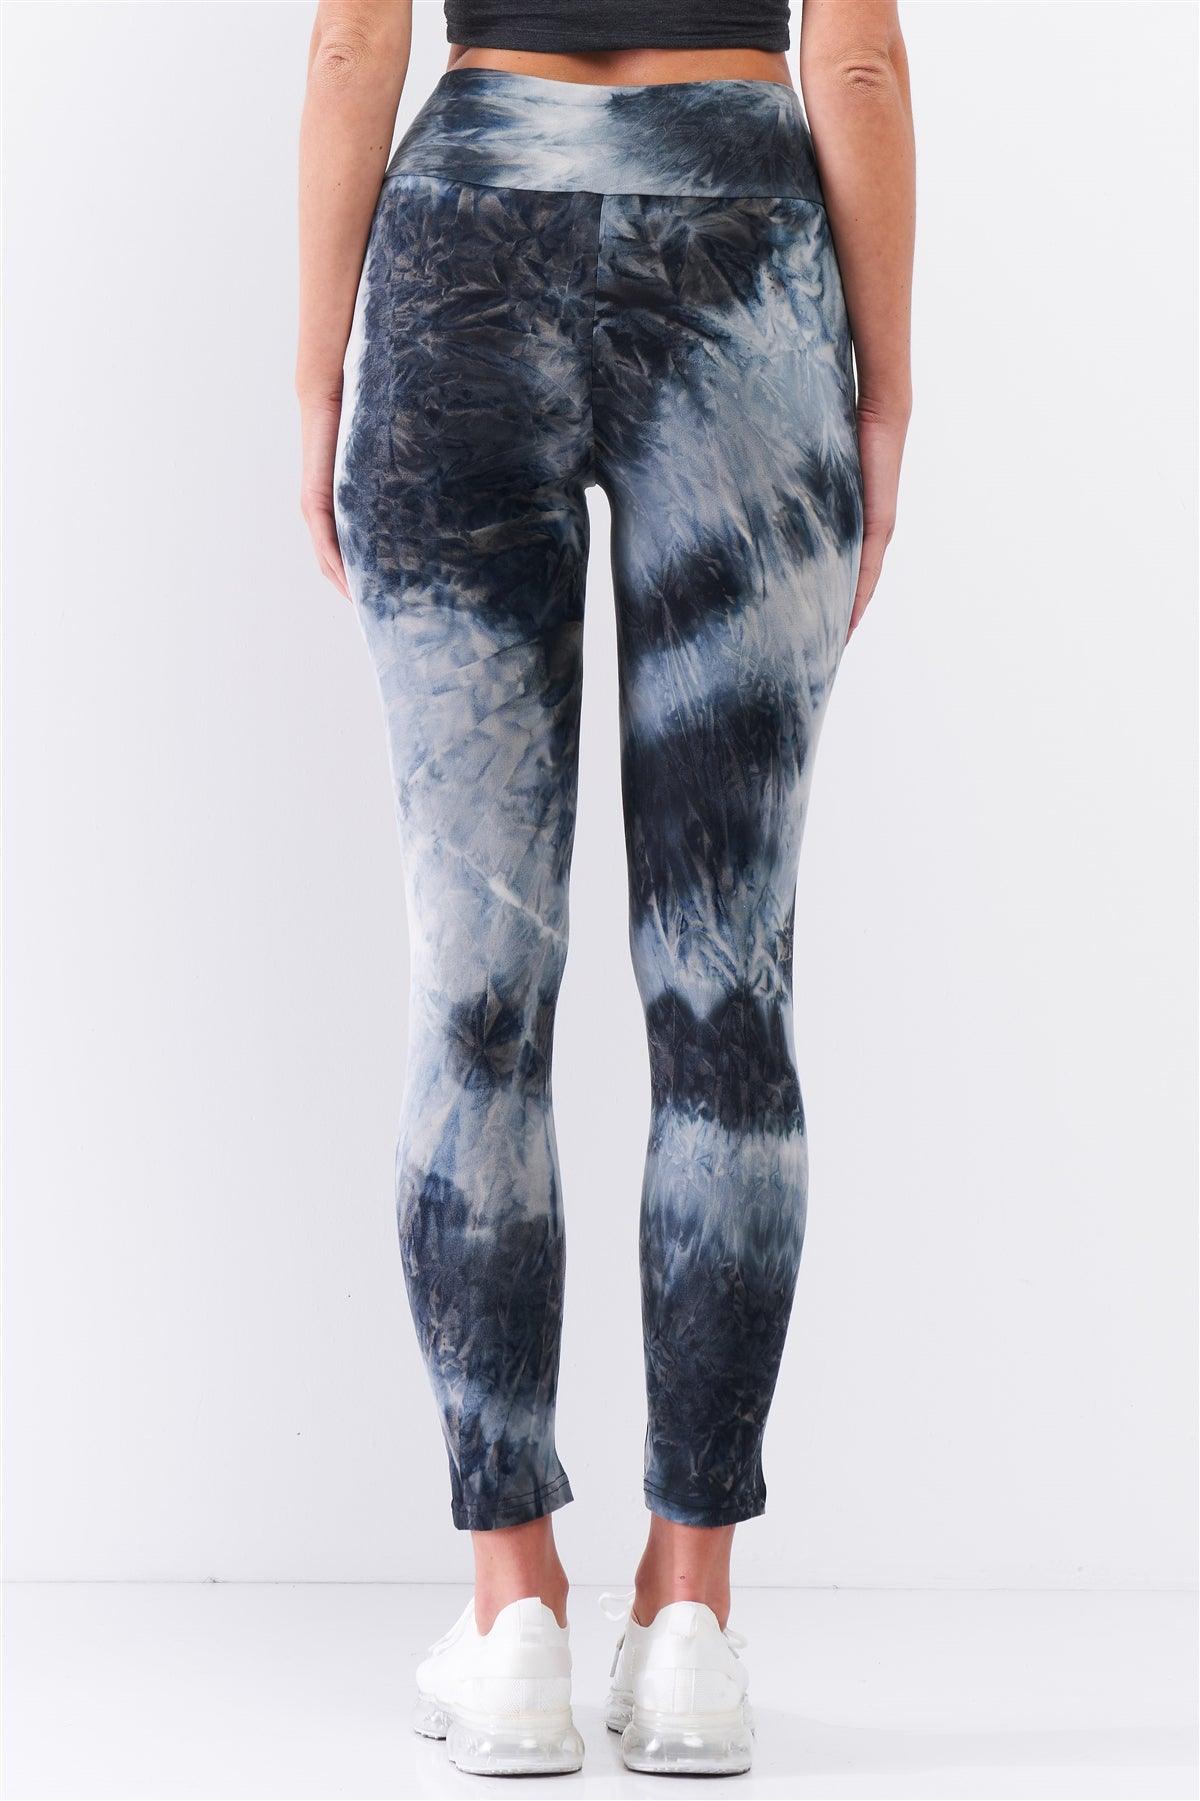 Comfy Dark Teal Tie-Dye High Waisted Stretchy Yoga Legging Pants /3-2-1